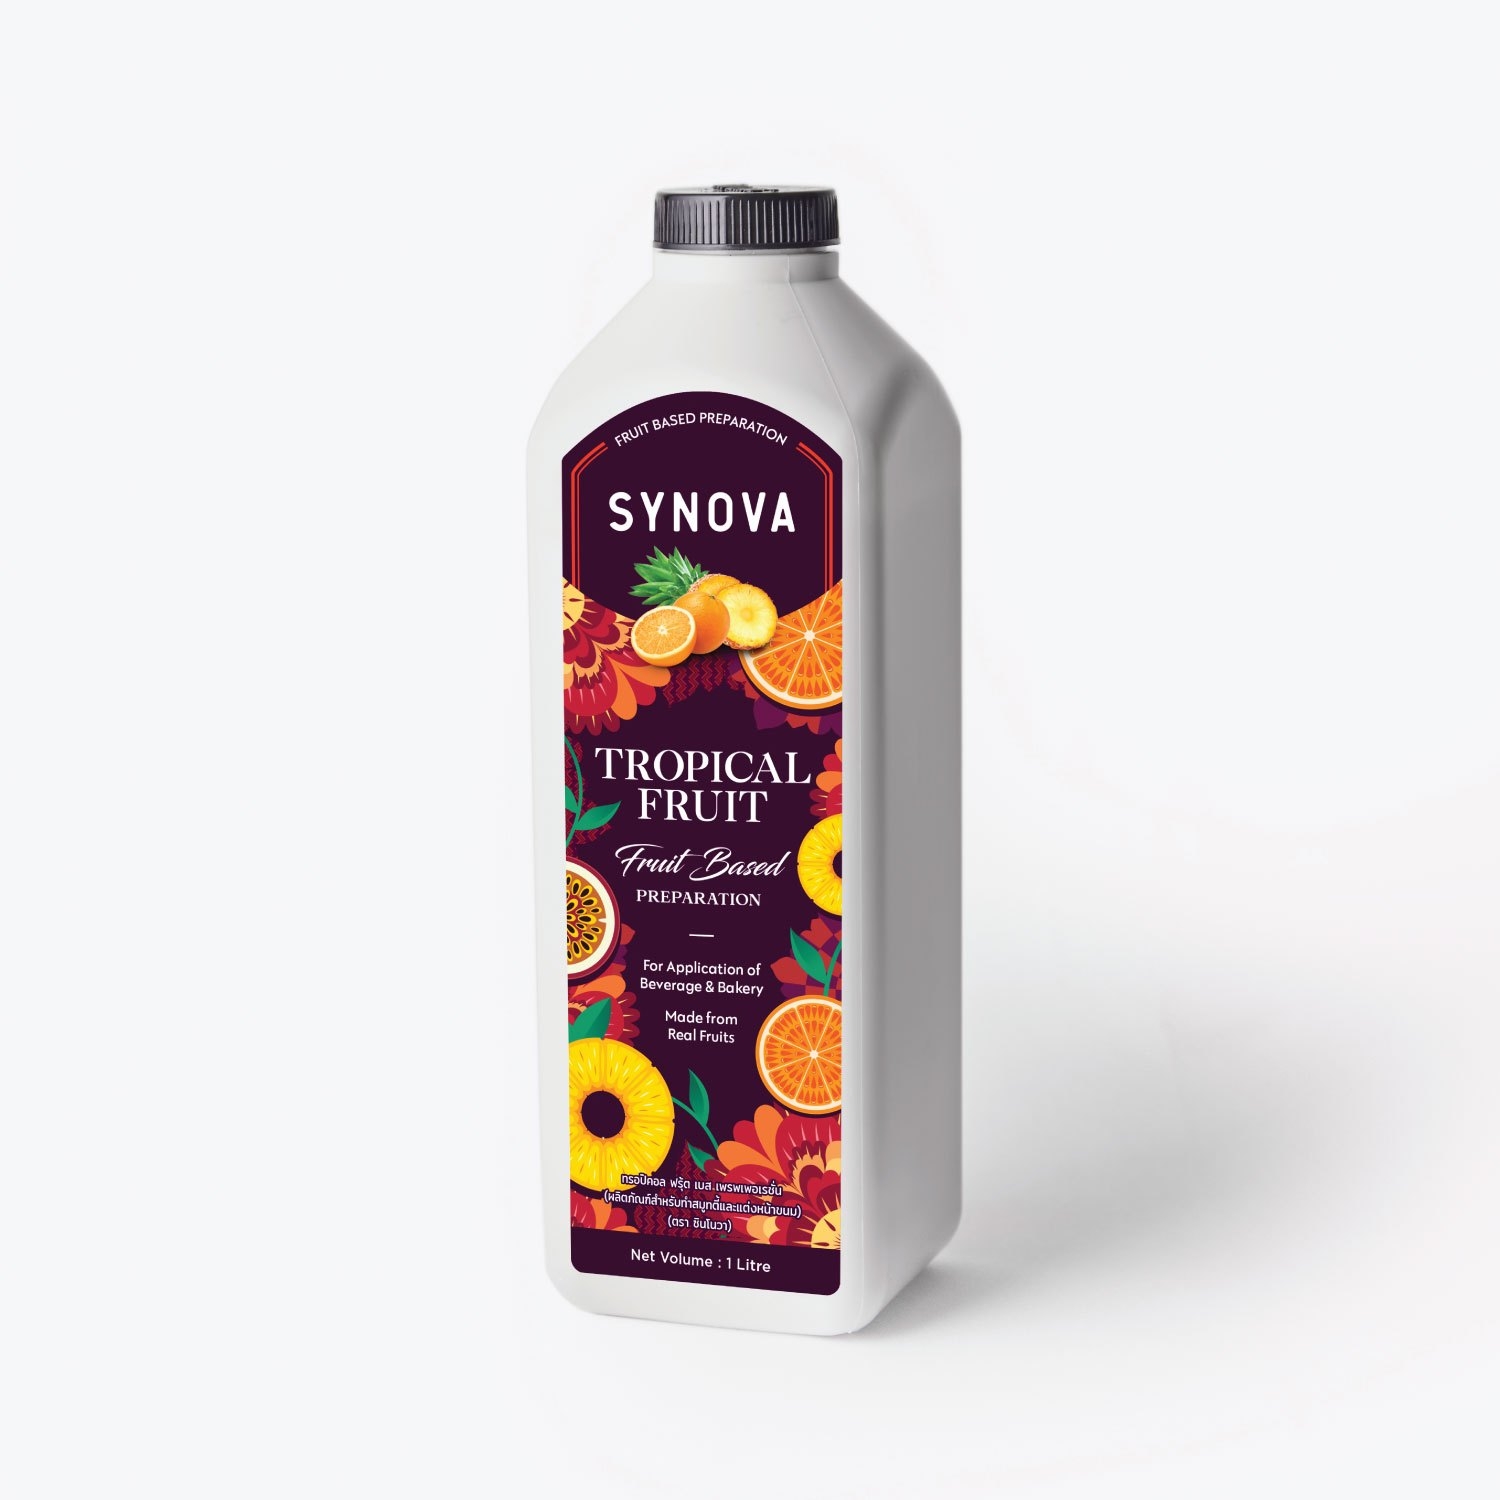 SYNOVA Tropical Fruit Based Preparation (Box)